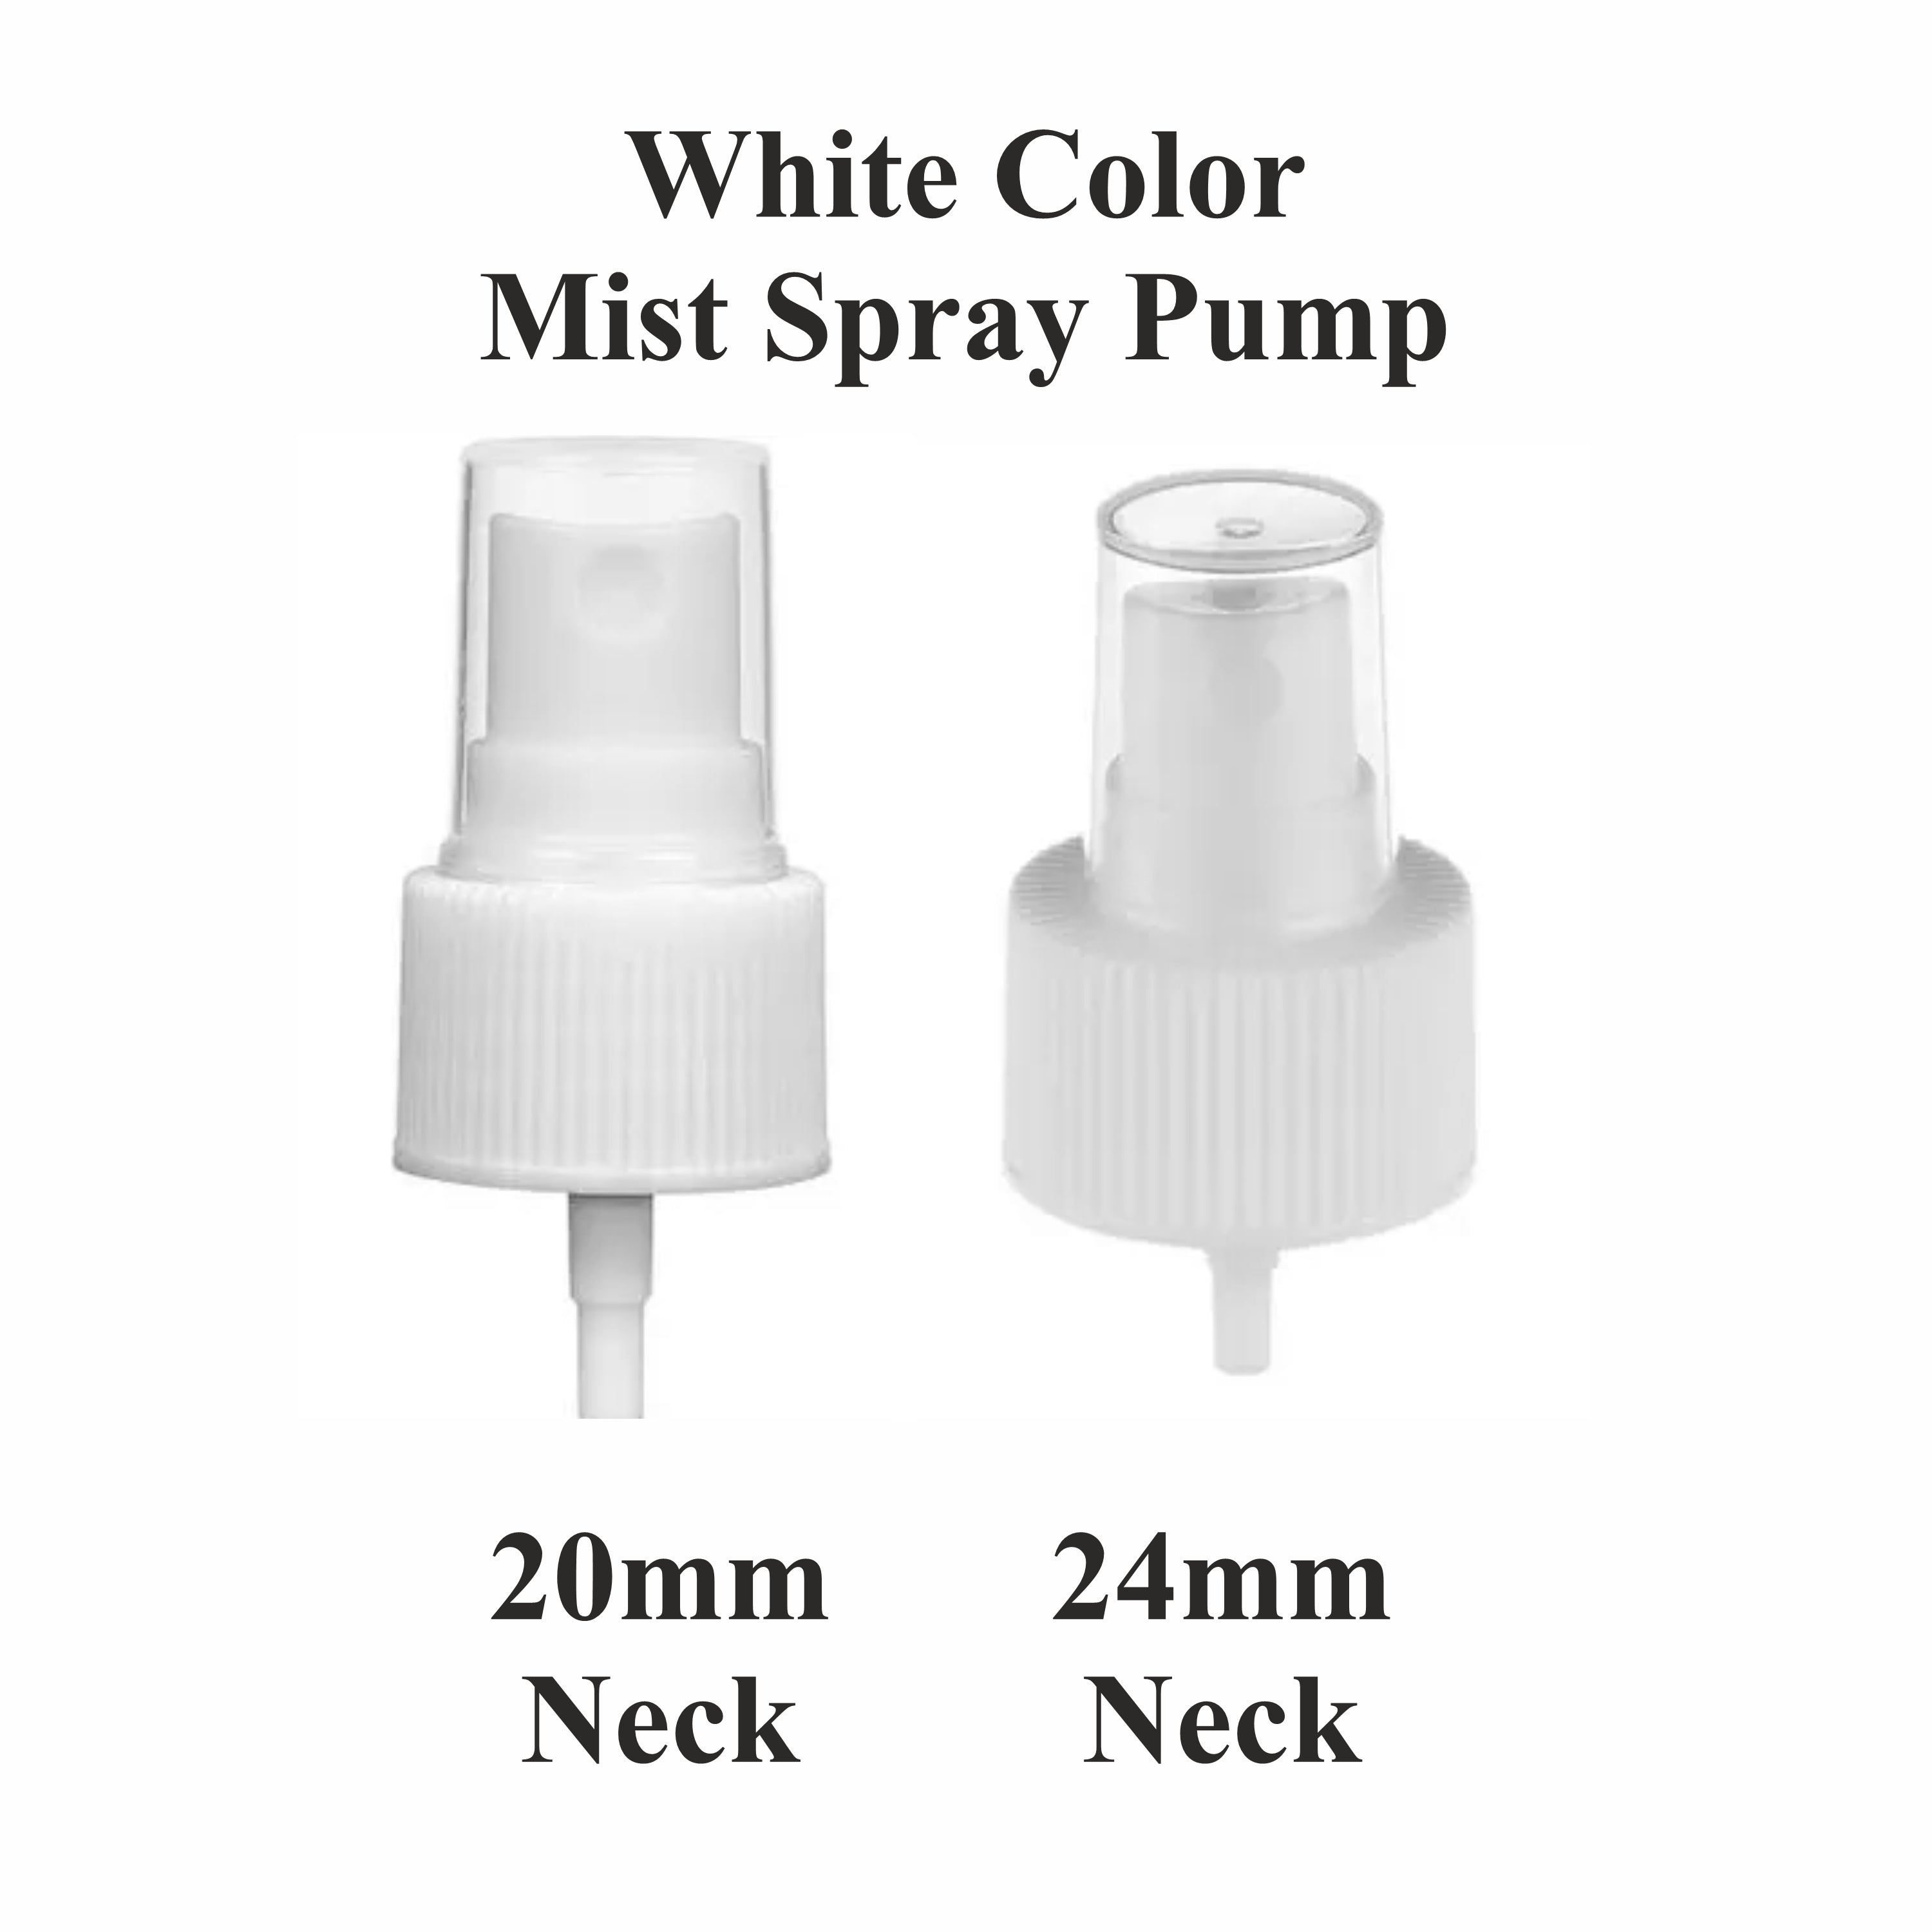 [ZMPC08] White Color Mist Spray Pump- 20mm & 24mm Neck